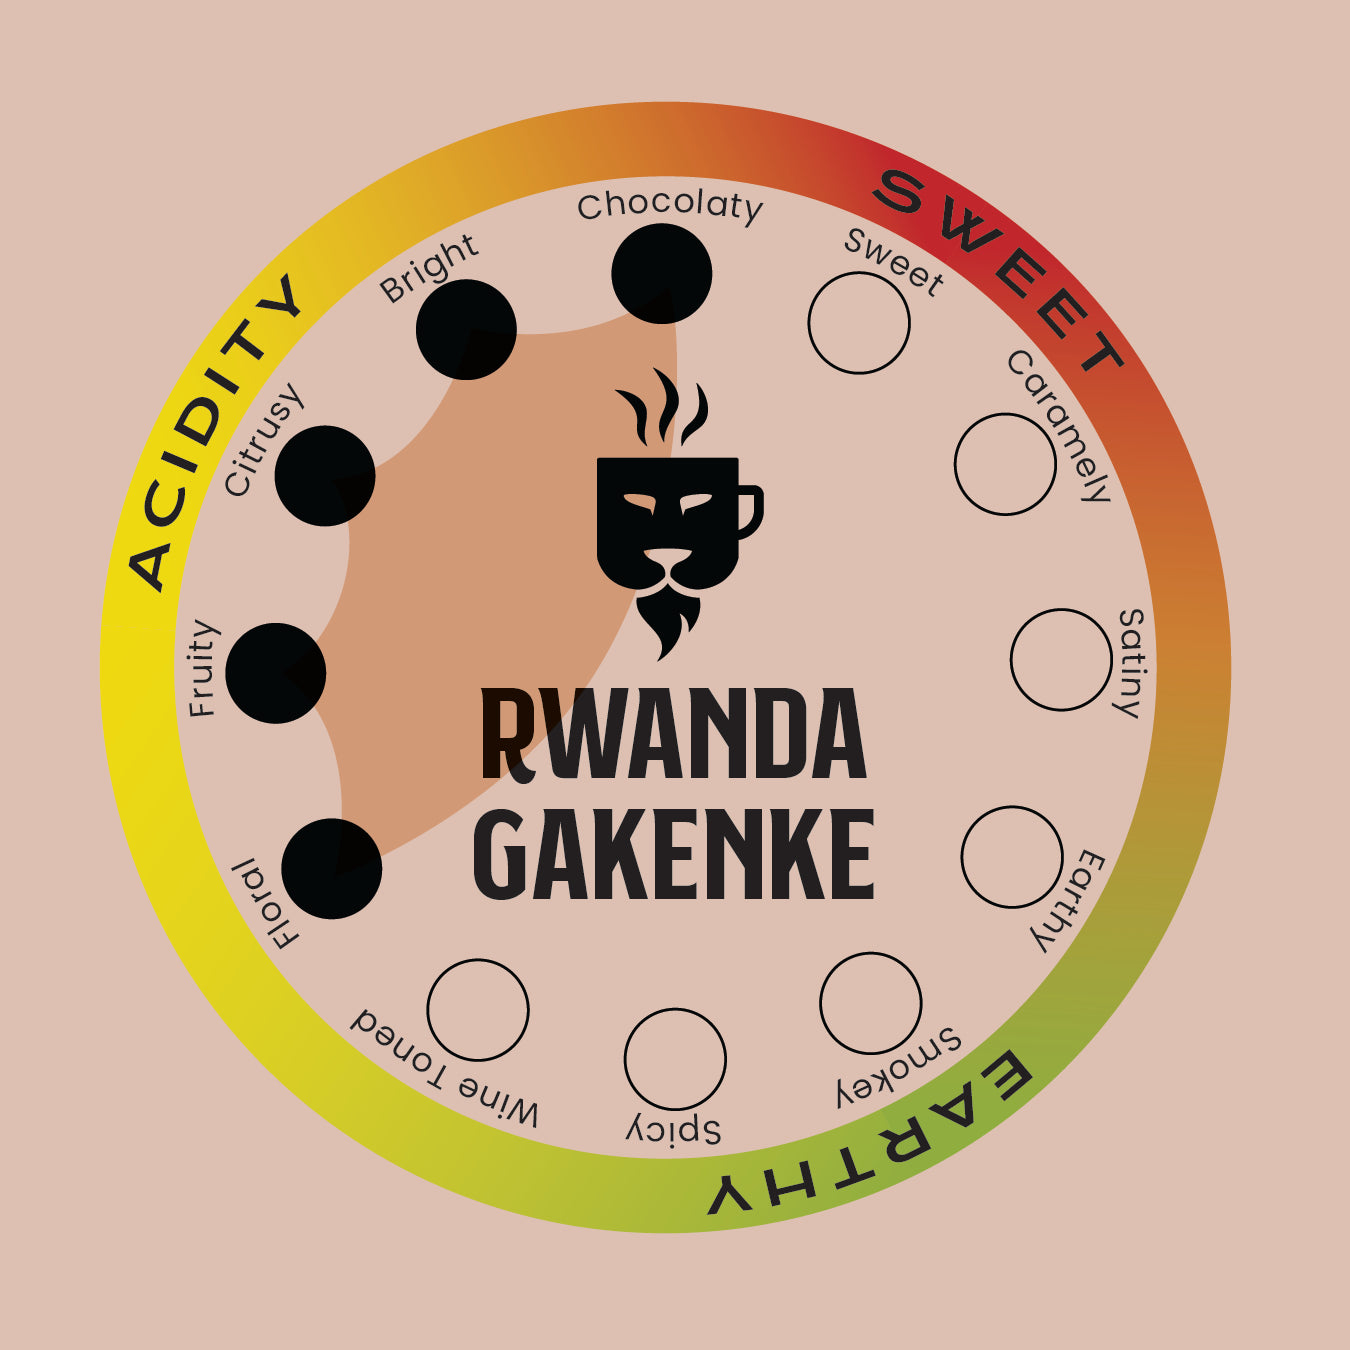 RWANDA GAKENKE COFFEE